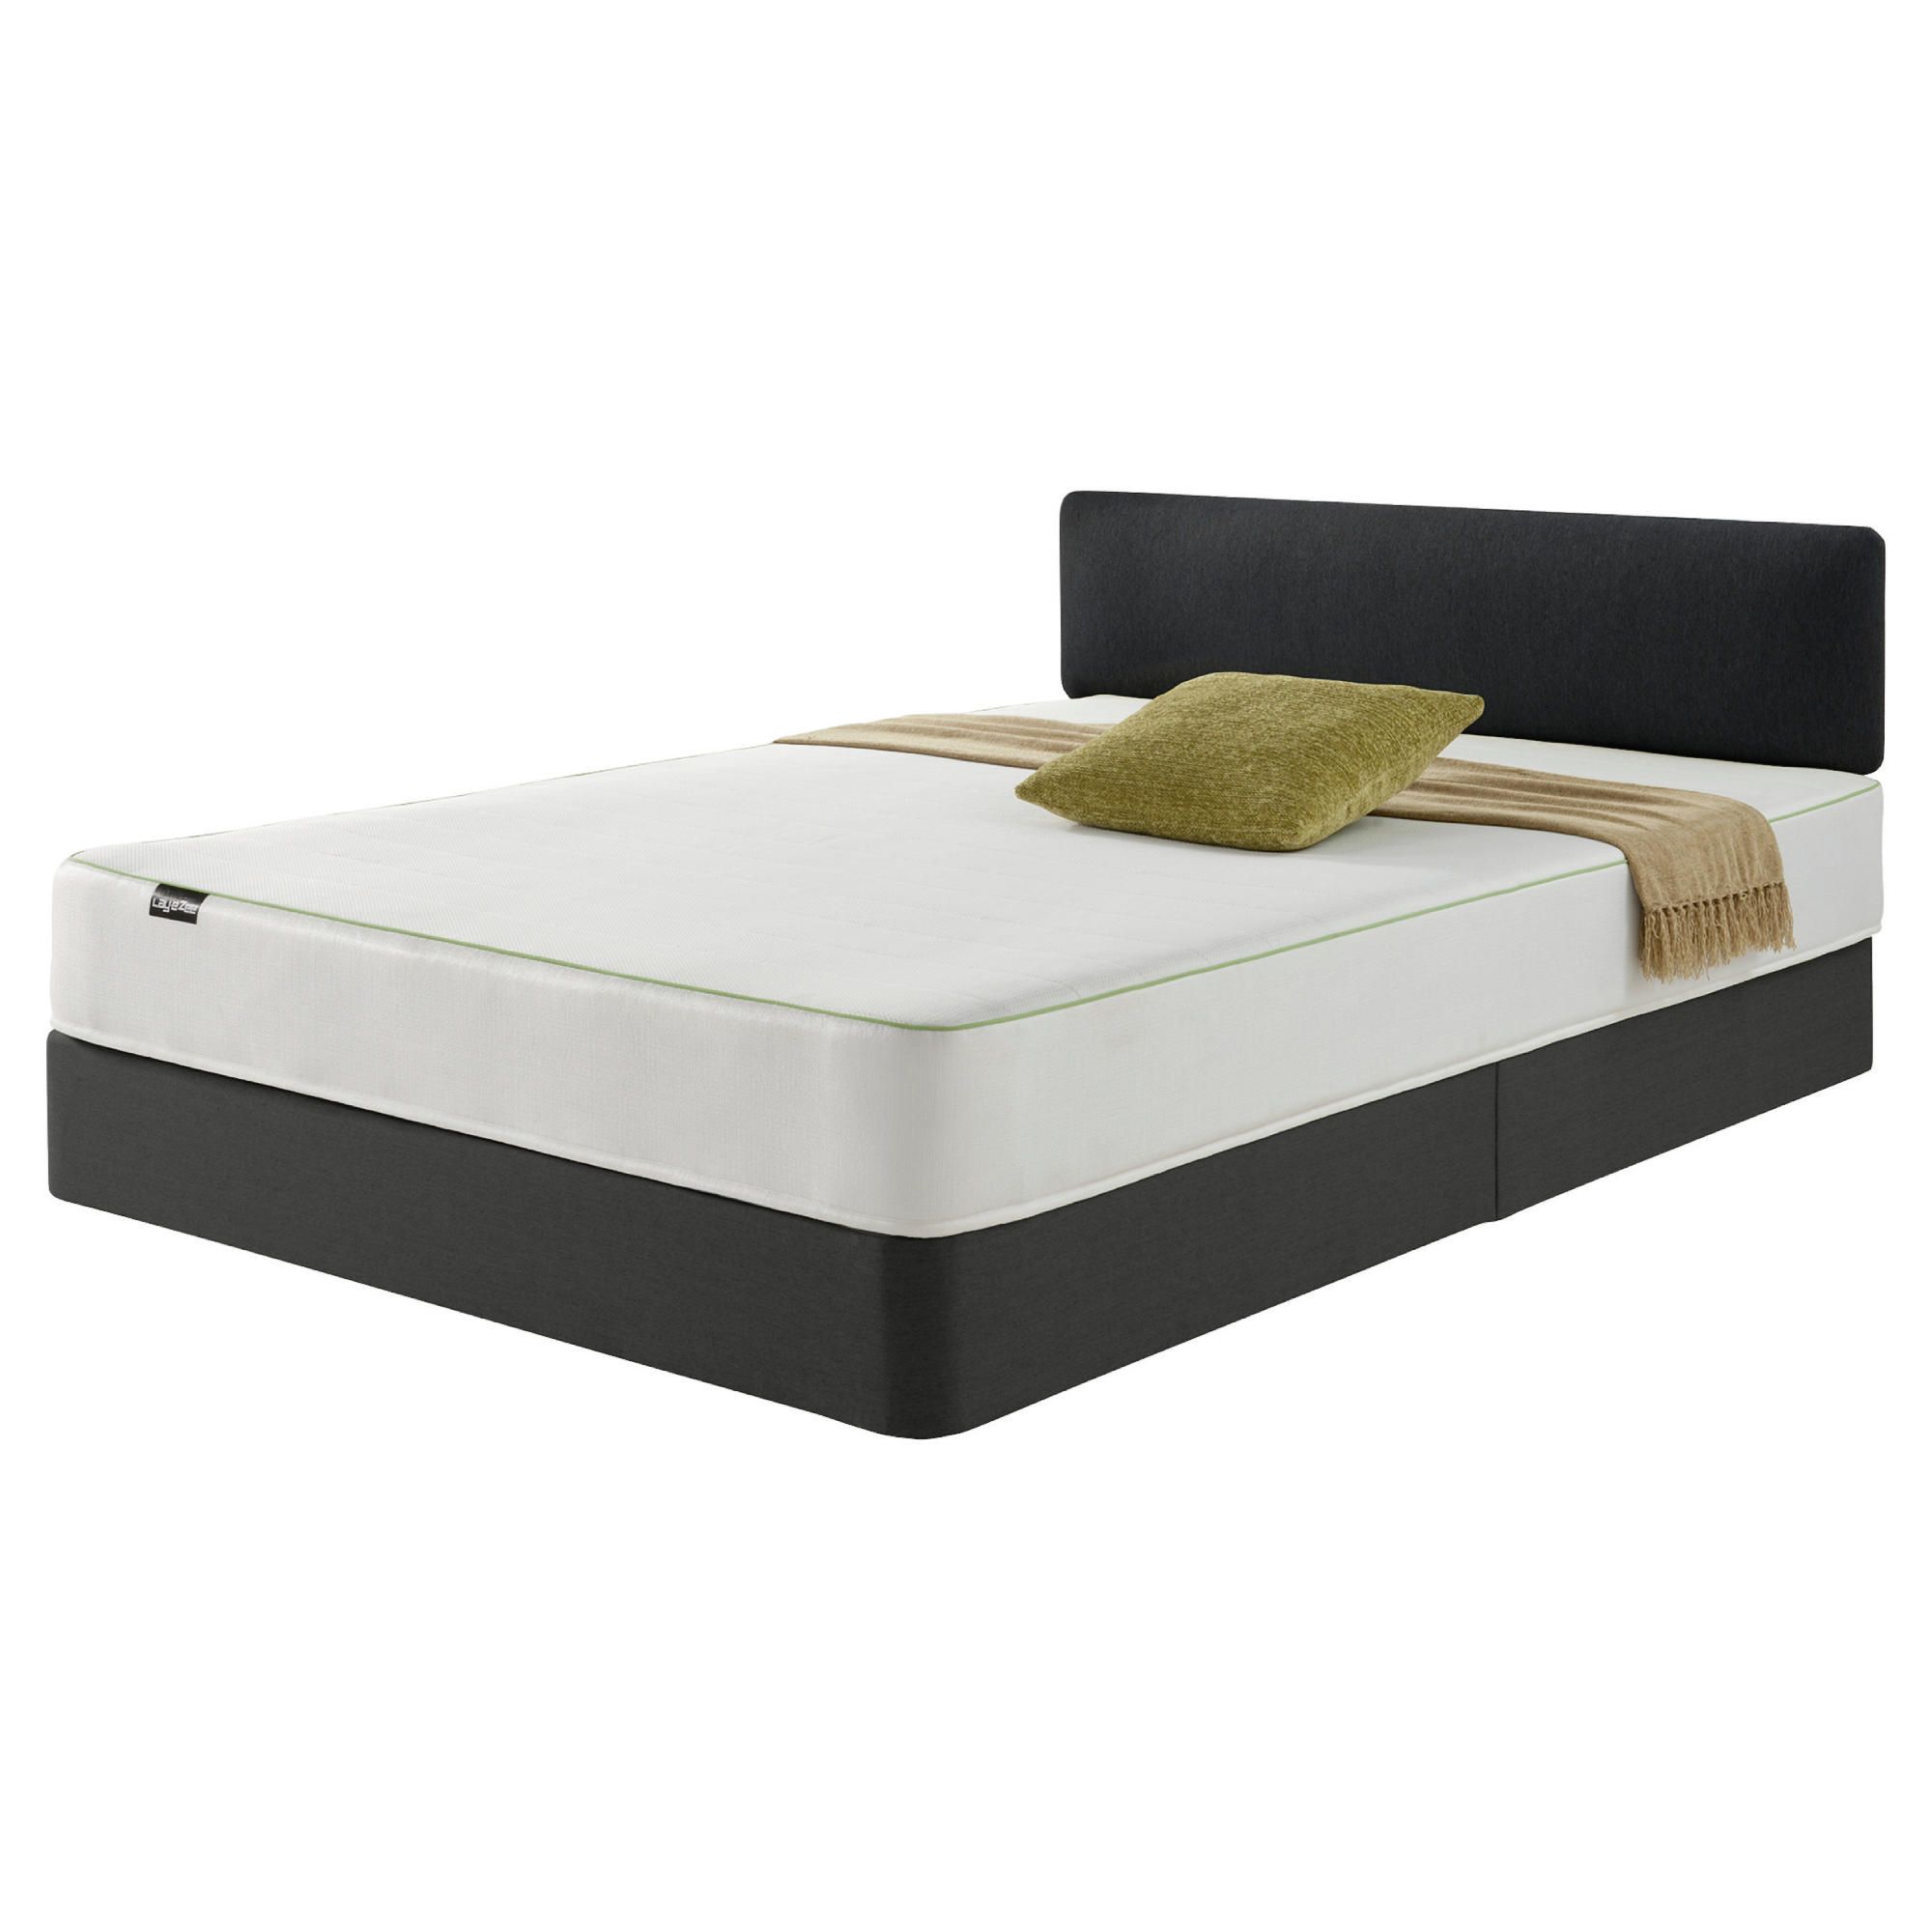 Layezee Charcoal Bed and Headboard Standard Mattress Single at Tesco Direct